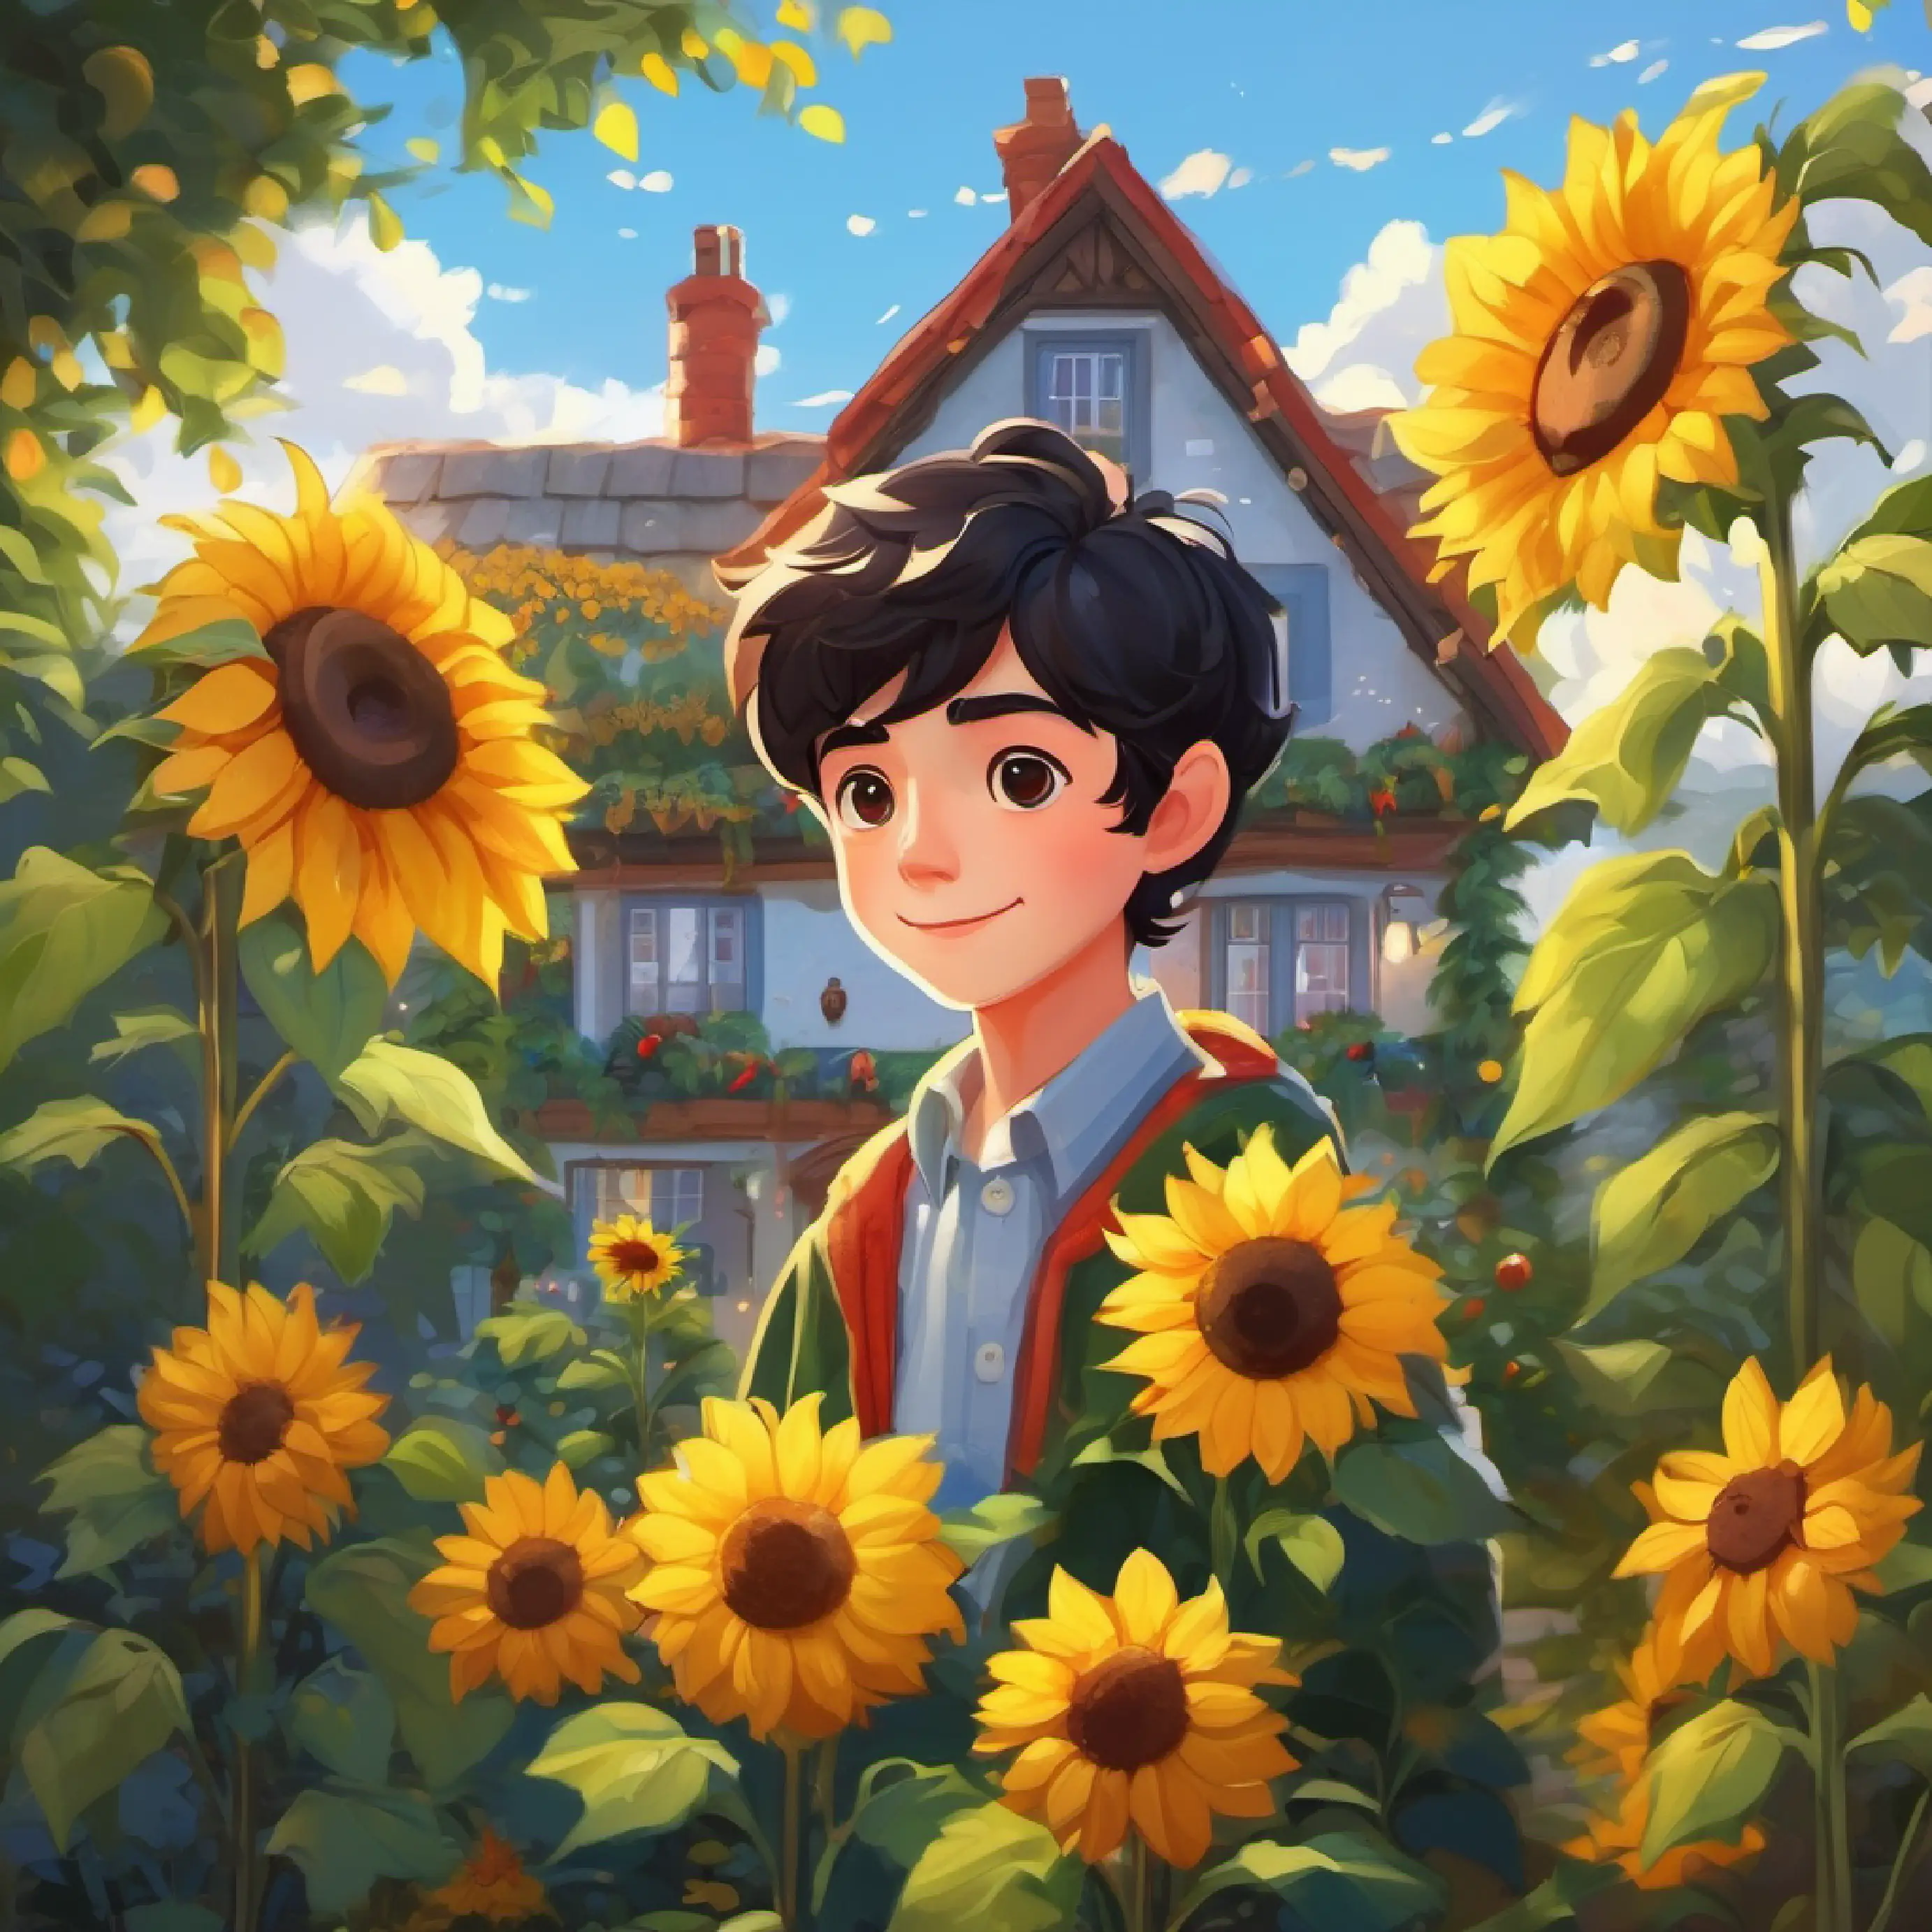 Introducing Dark-haired, dark-eyed boy, cute as a button, cozy house, sunflower garden